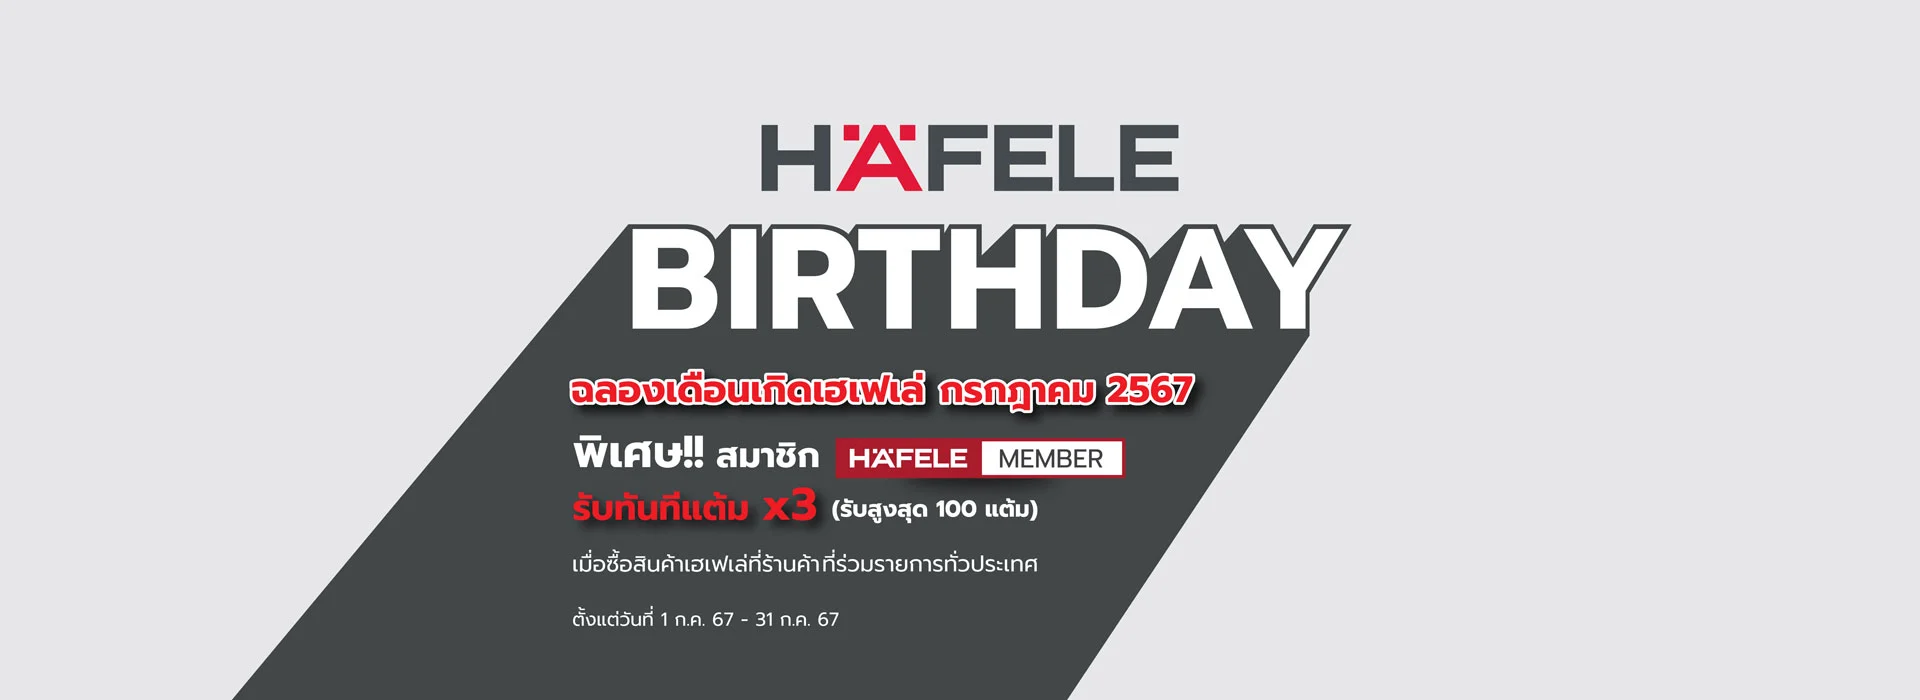 Hafele Birthday